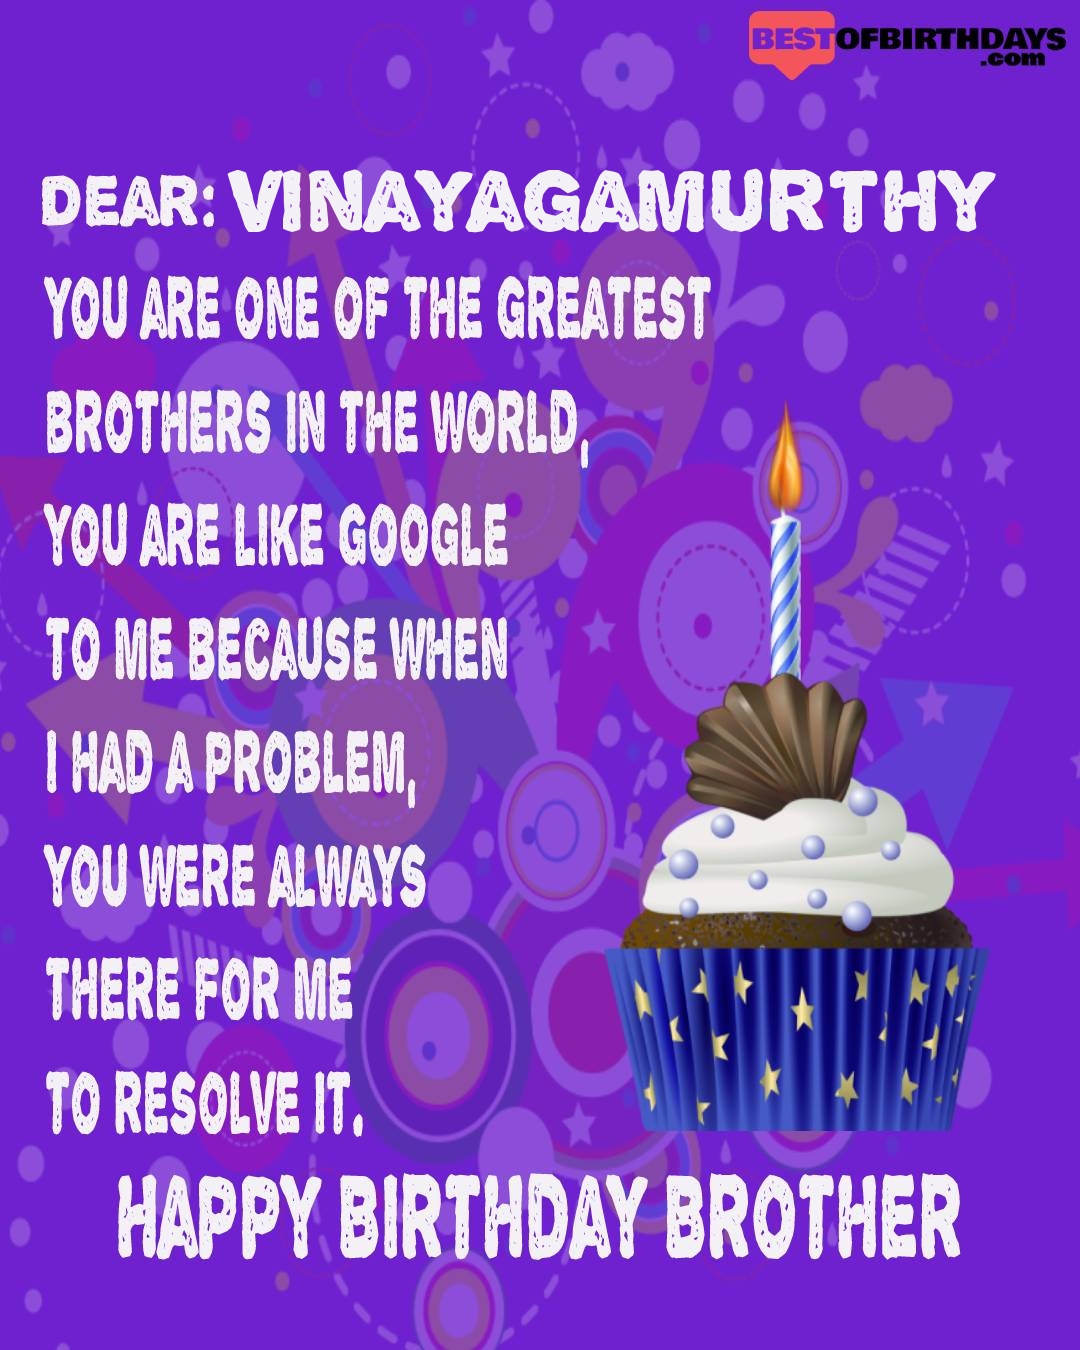 Happy birthday vinayagamurthy bhai brother bro